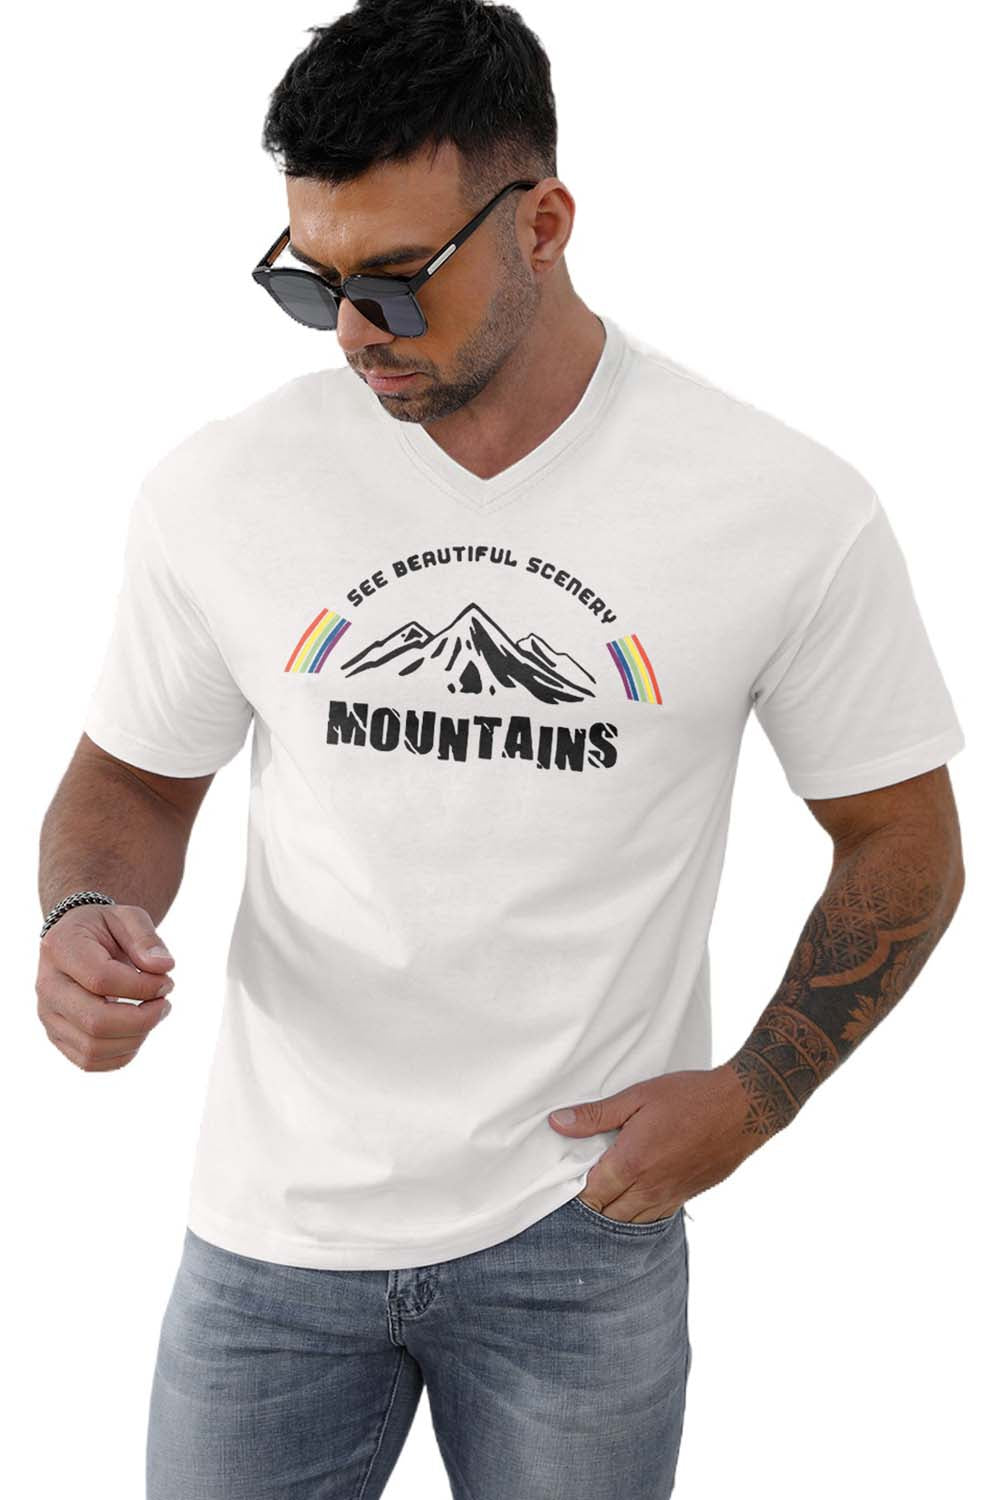 White See Beautiful Scenery Mountains Print T Shirt for Men Men's Tops JT's Designer Fashion